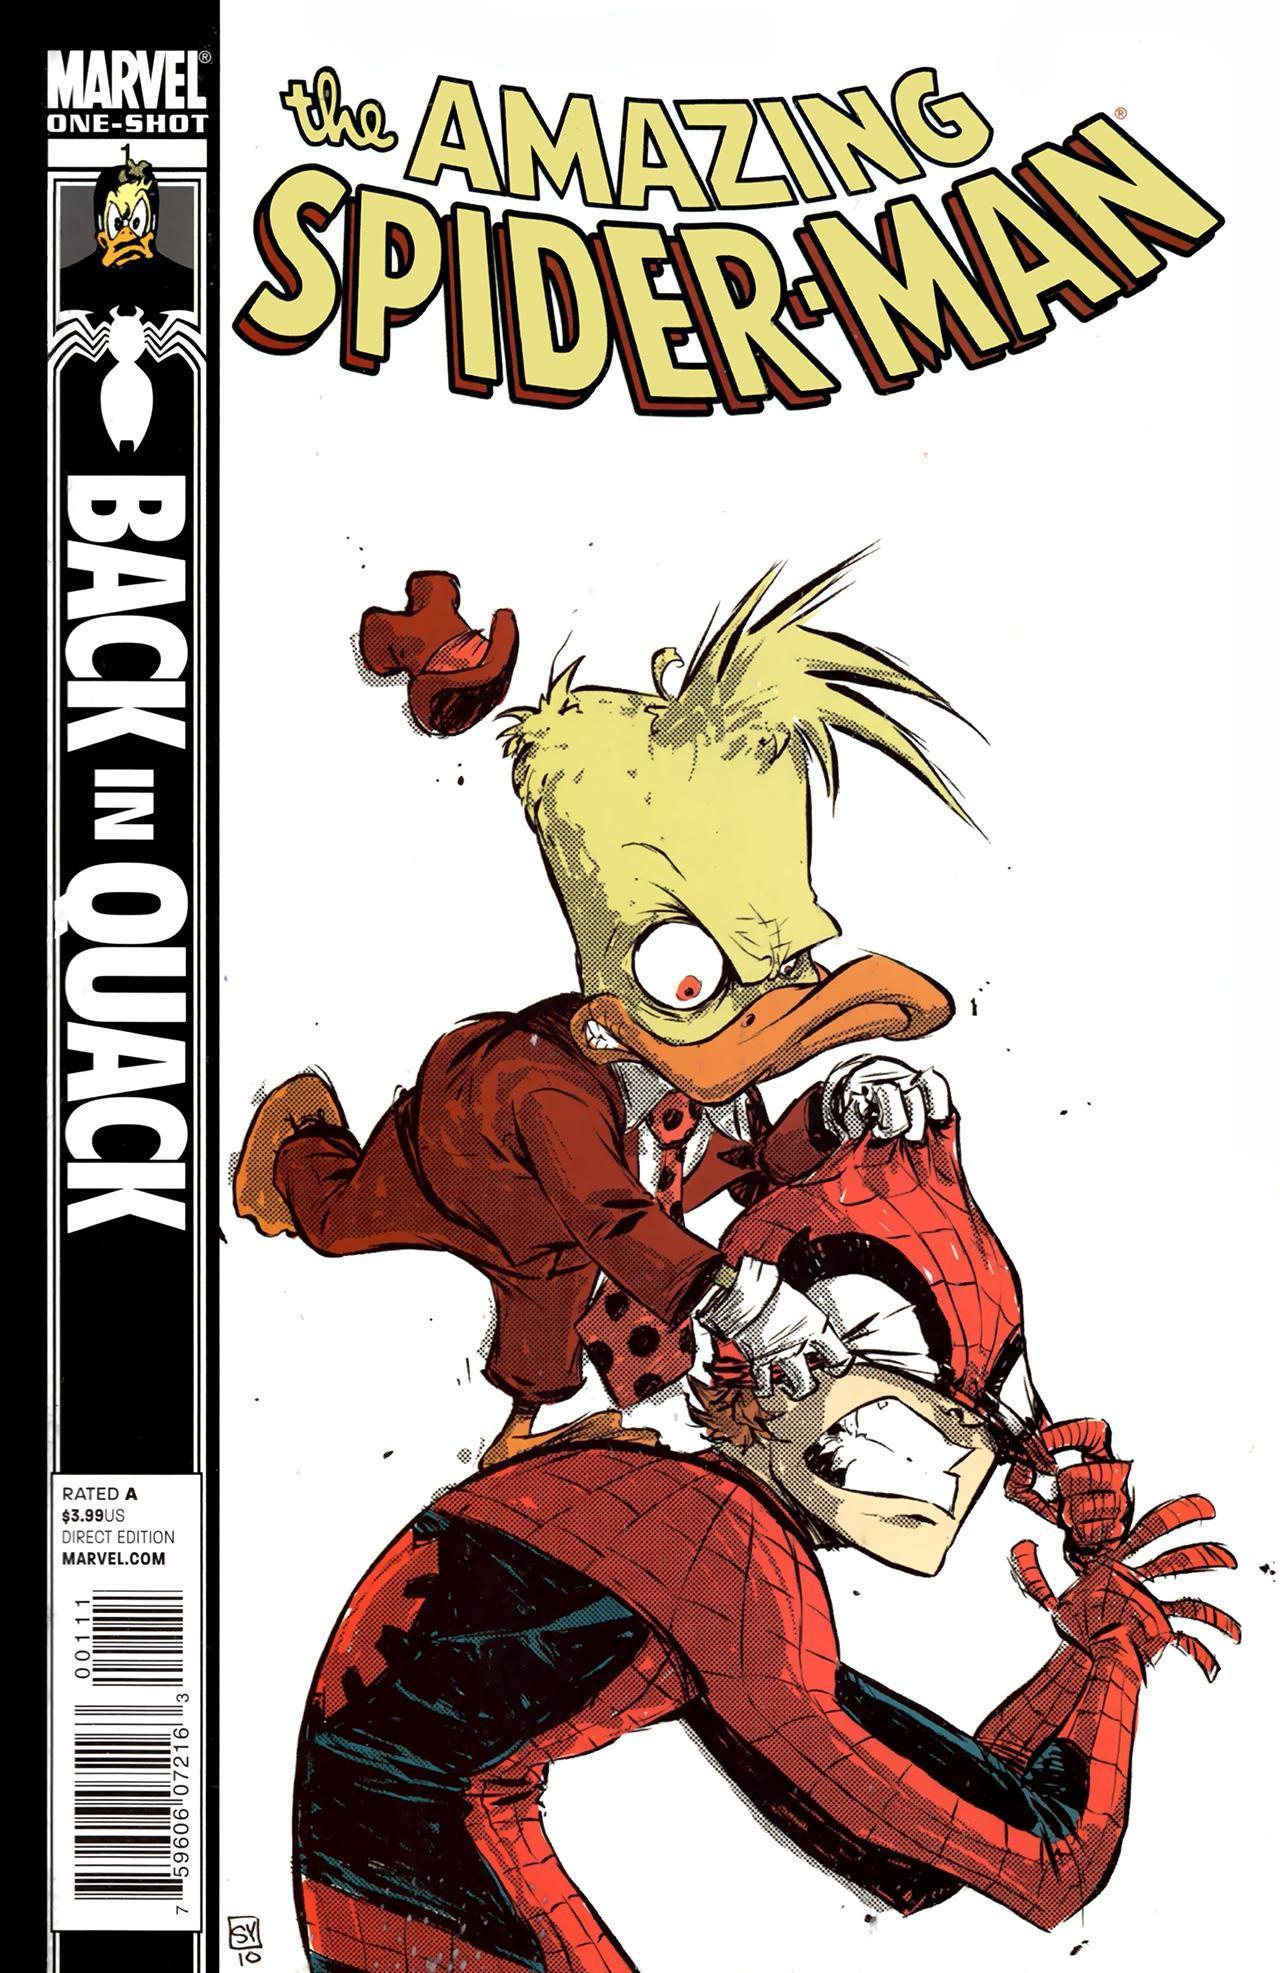 Spider-Man: Back in Quack Vol. 1 #1